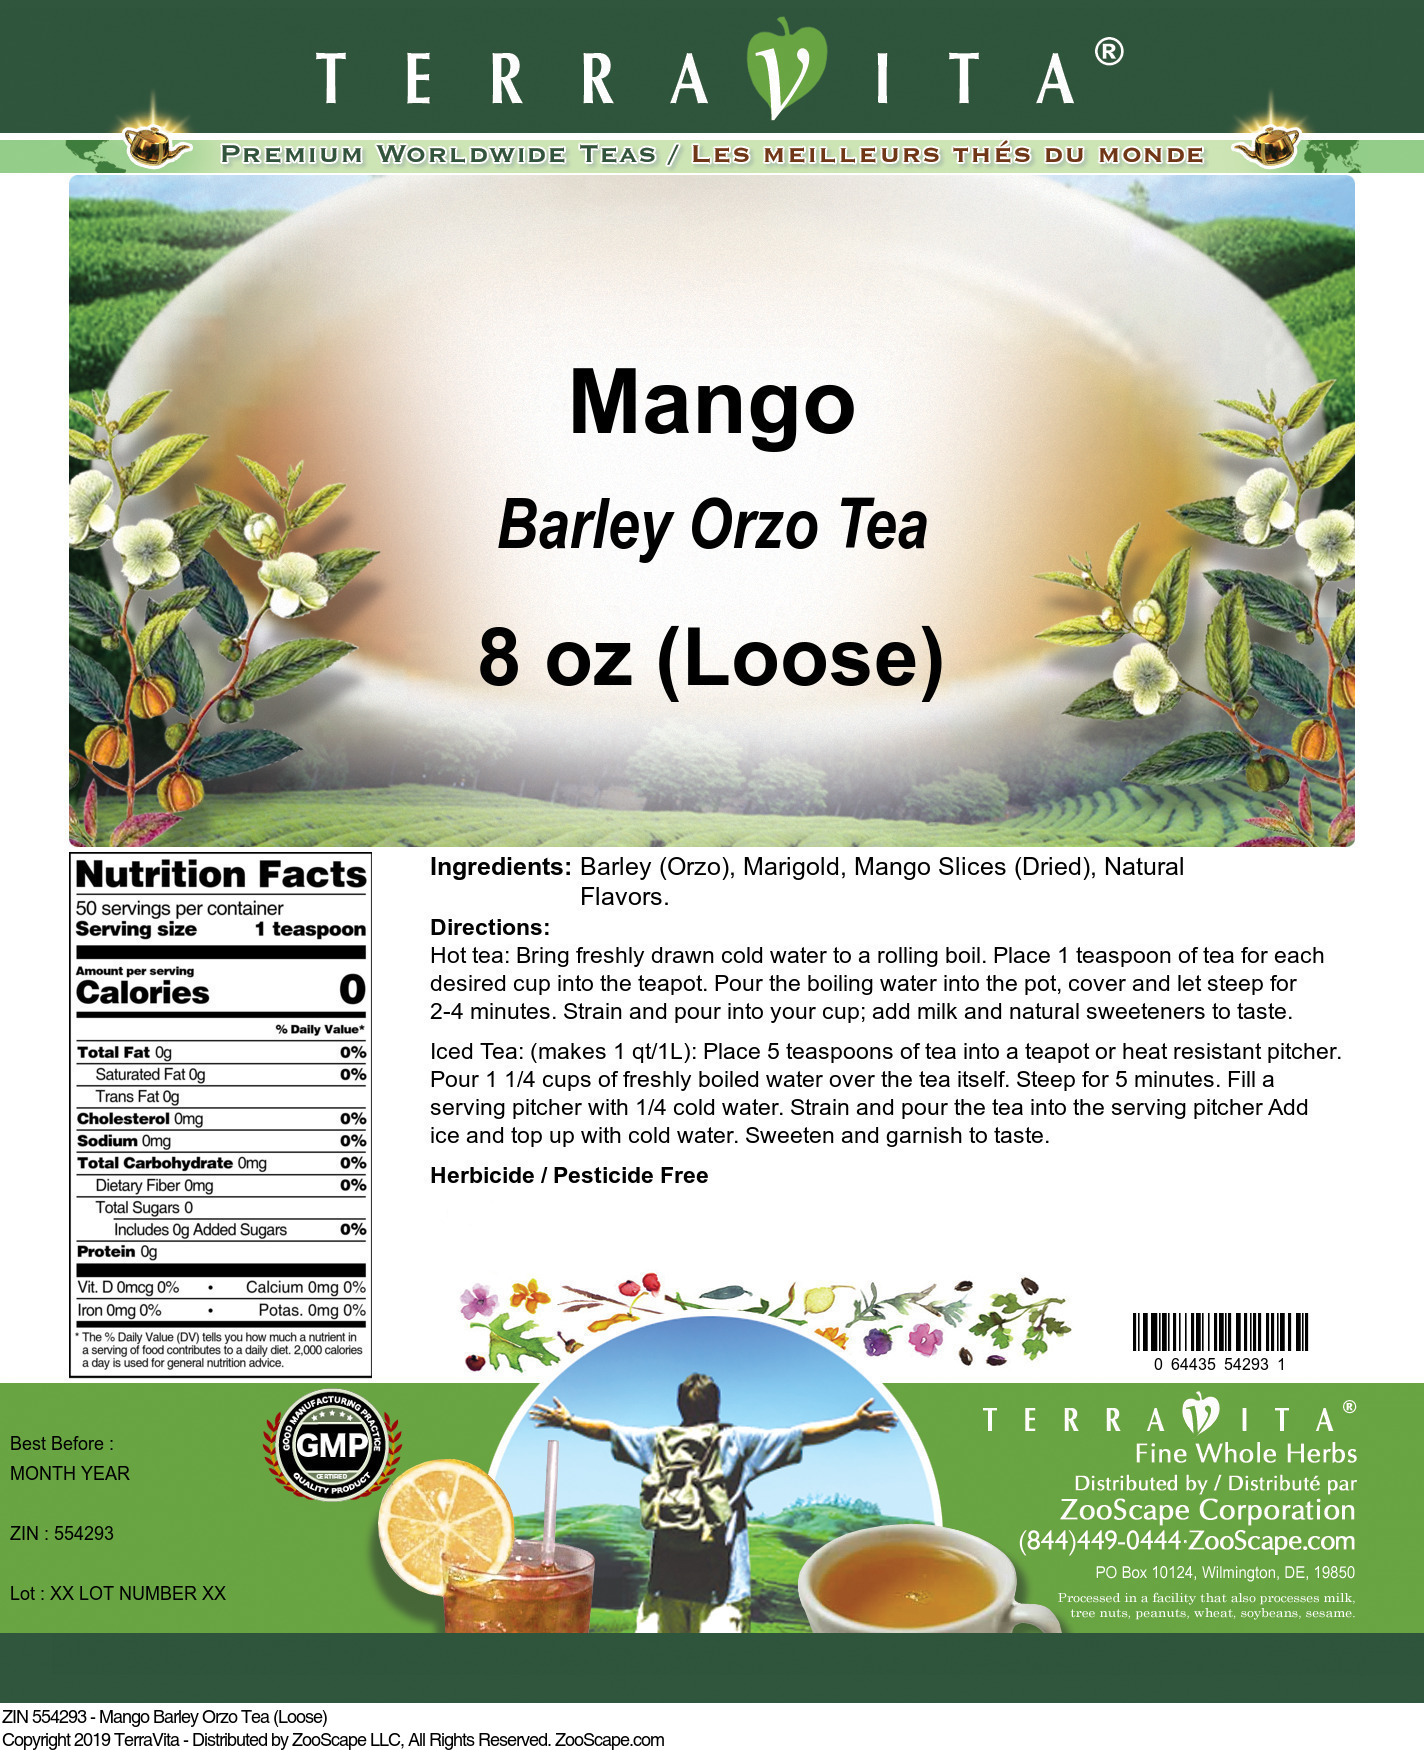 Mango Barley Orzo Tea (Loose) - Label